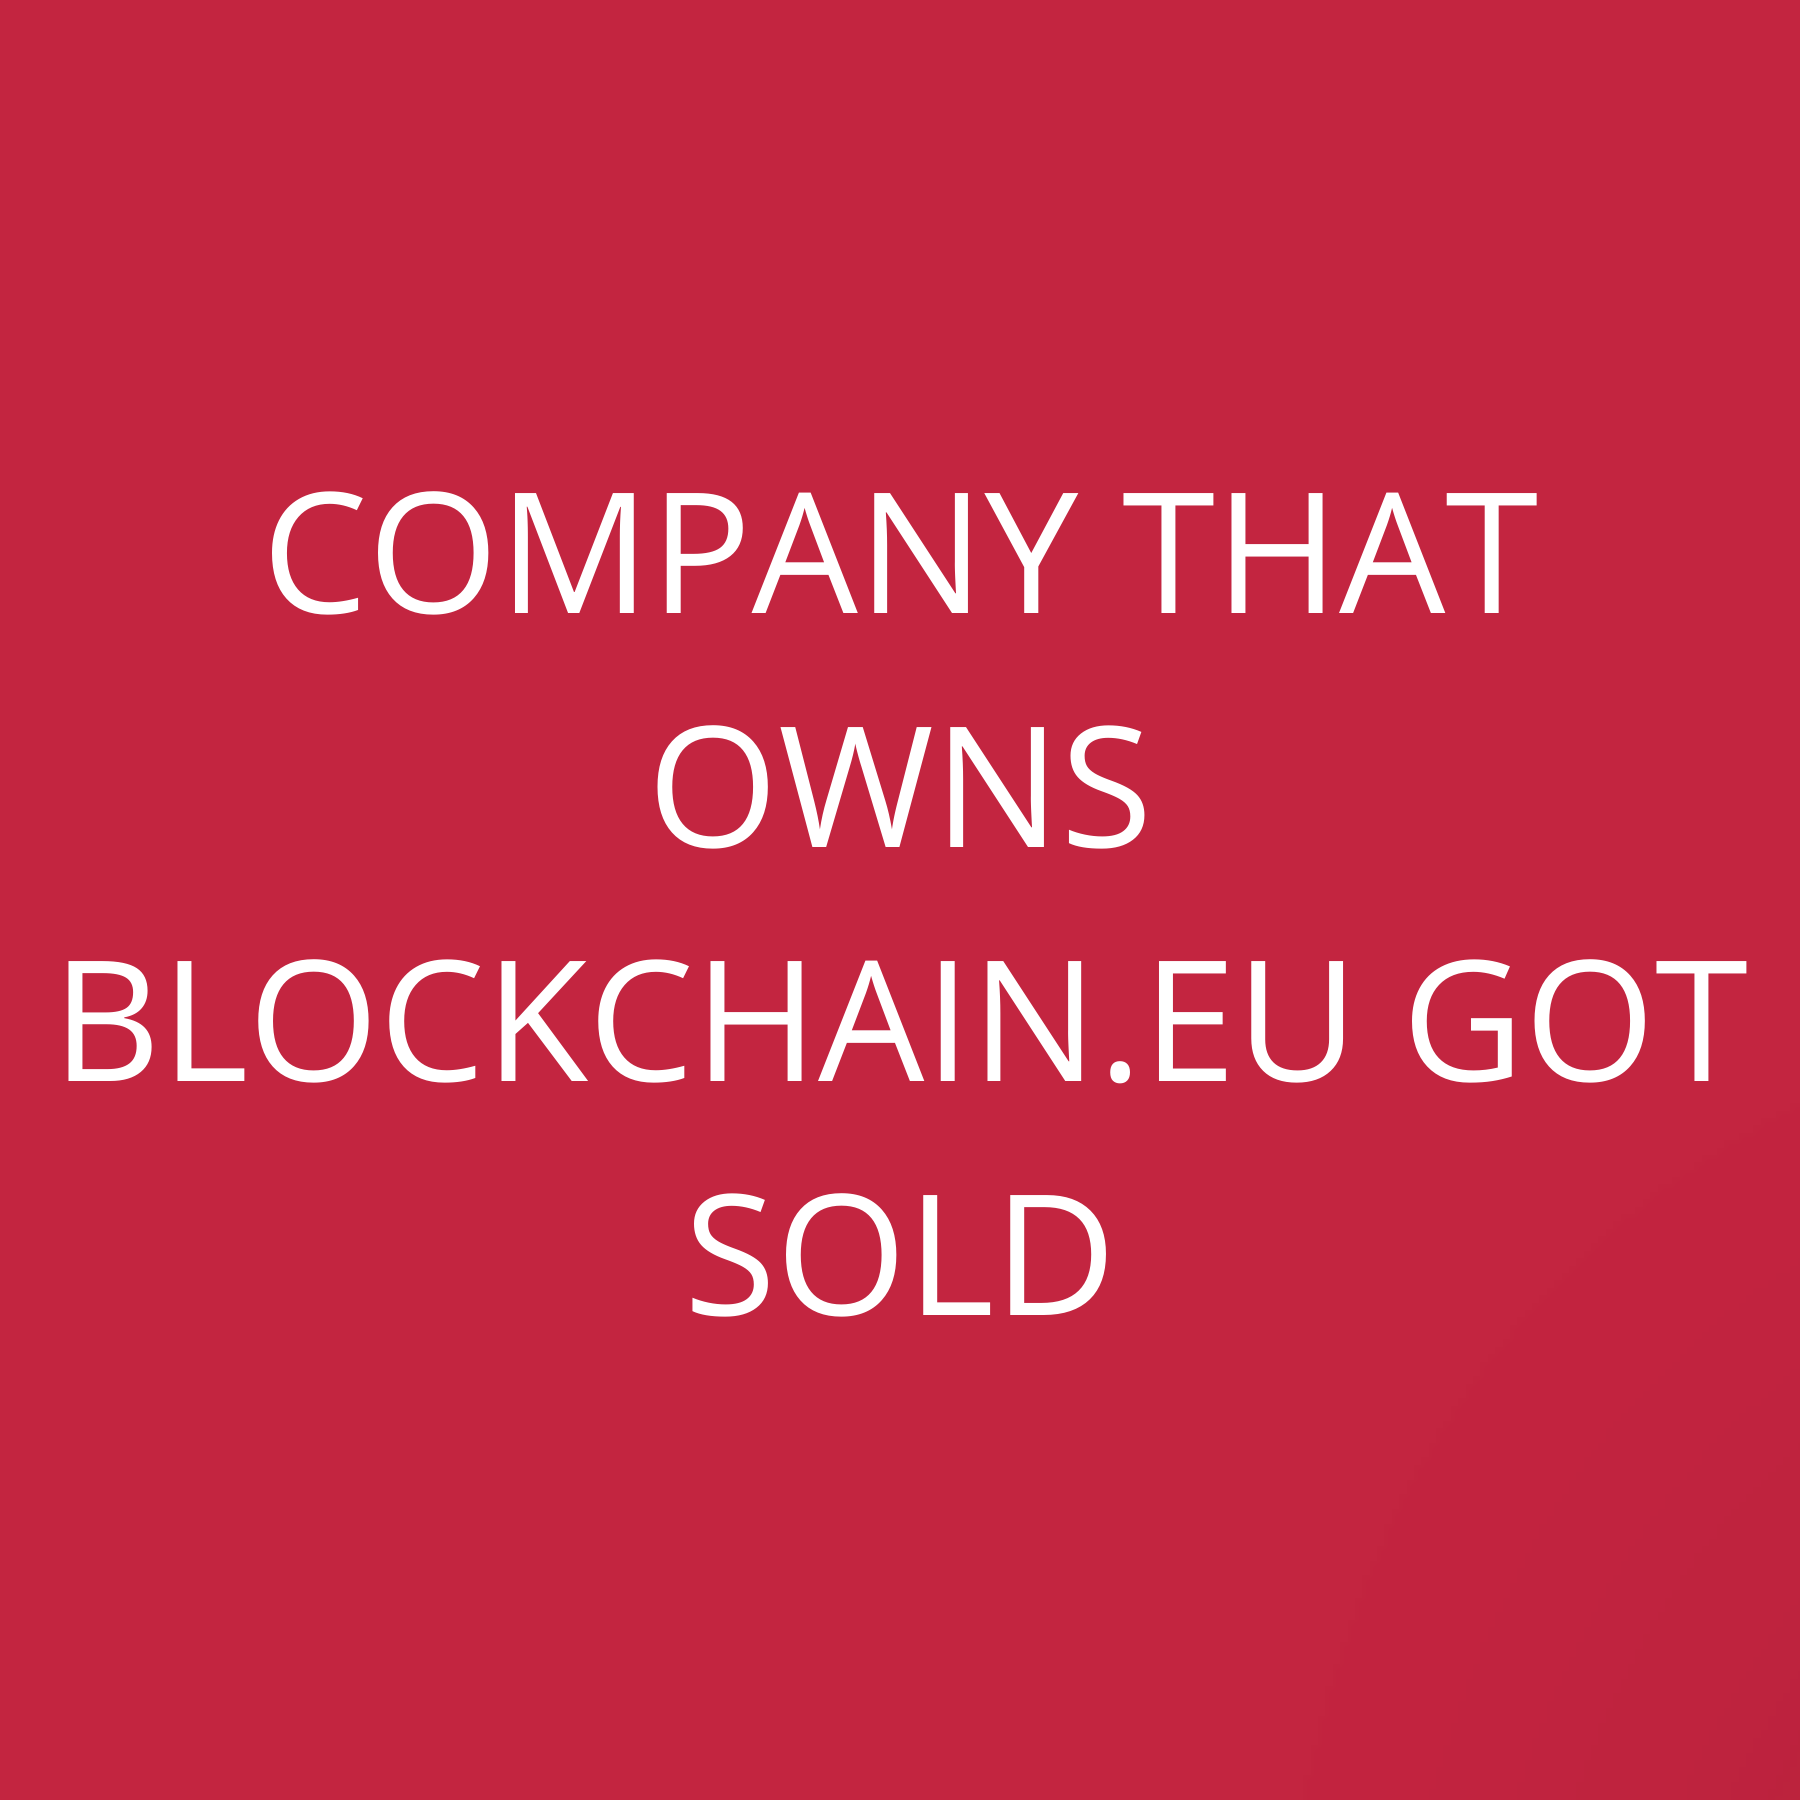 Company that owns Blockchain.eu got sold